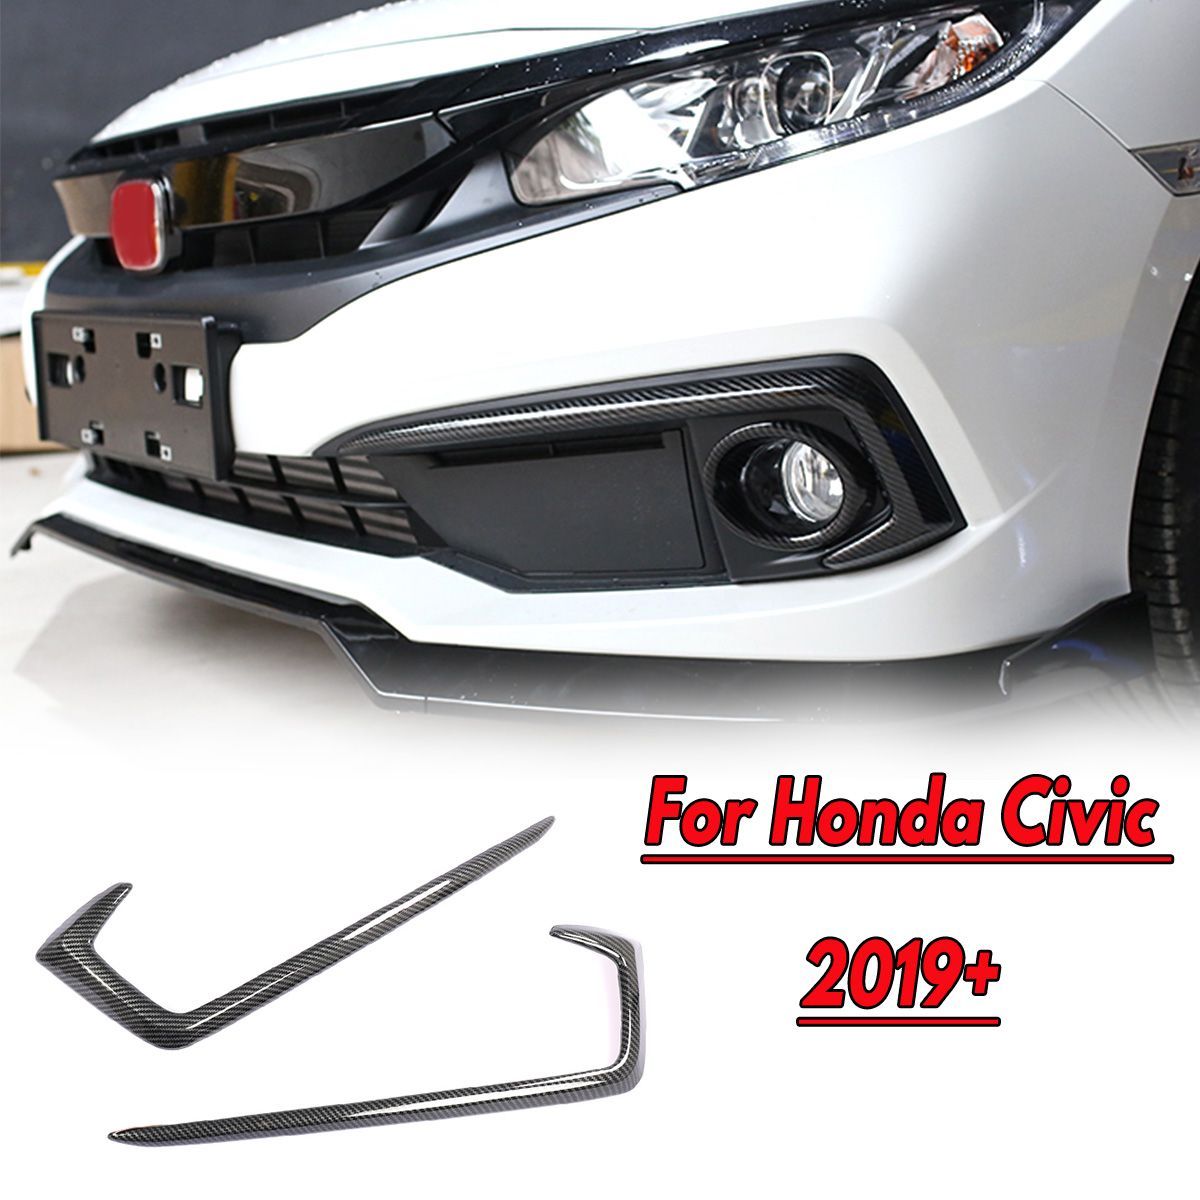 Carbon-Fiber-Style-Front-Fog-light-Eyebrow-Cover-Trim-For-Honda-Civic-2019-1560082